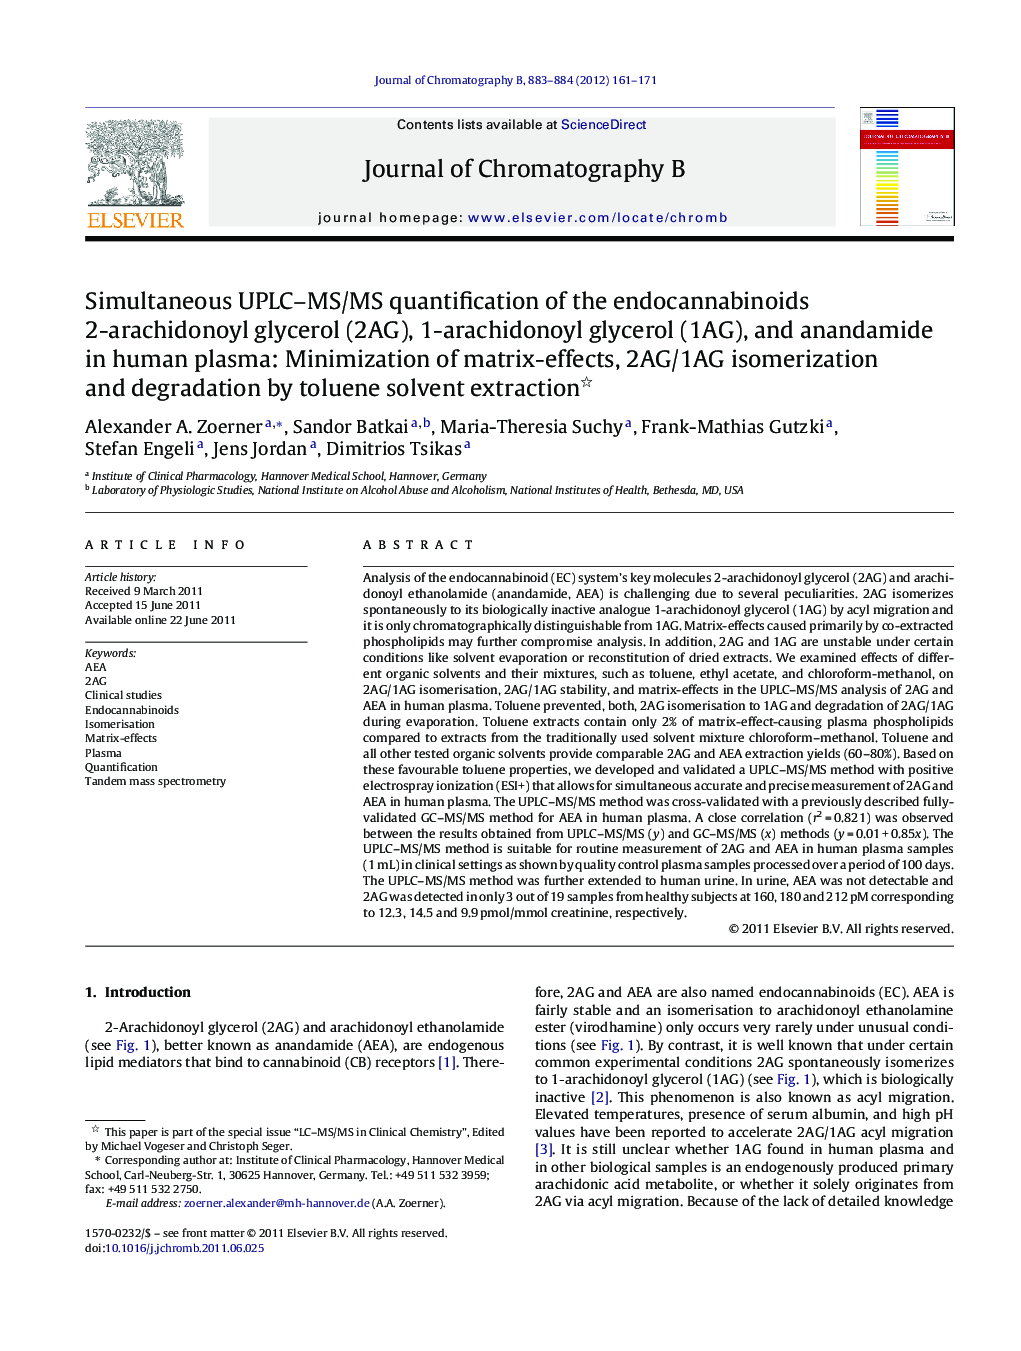 Simultaneous UPLC-MS/MS quantification of the endocannabinoids 2-arachidonoyl glycerol (2AG), 1-arachidonoyl glycerol (1AG), and anandamide in human plasma: Minimization of matrix-effects, 2AG/1AG isomerization and degradation by toluene solvent extractio